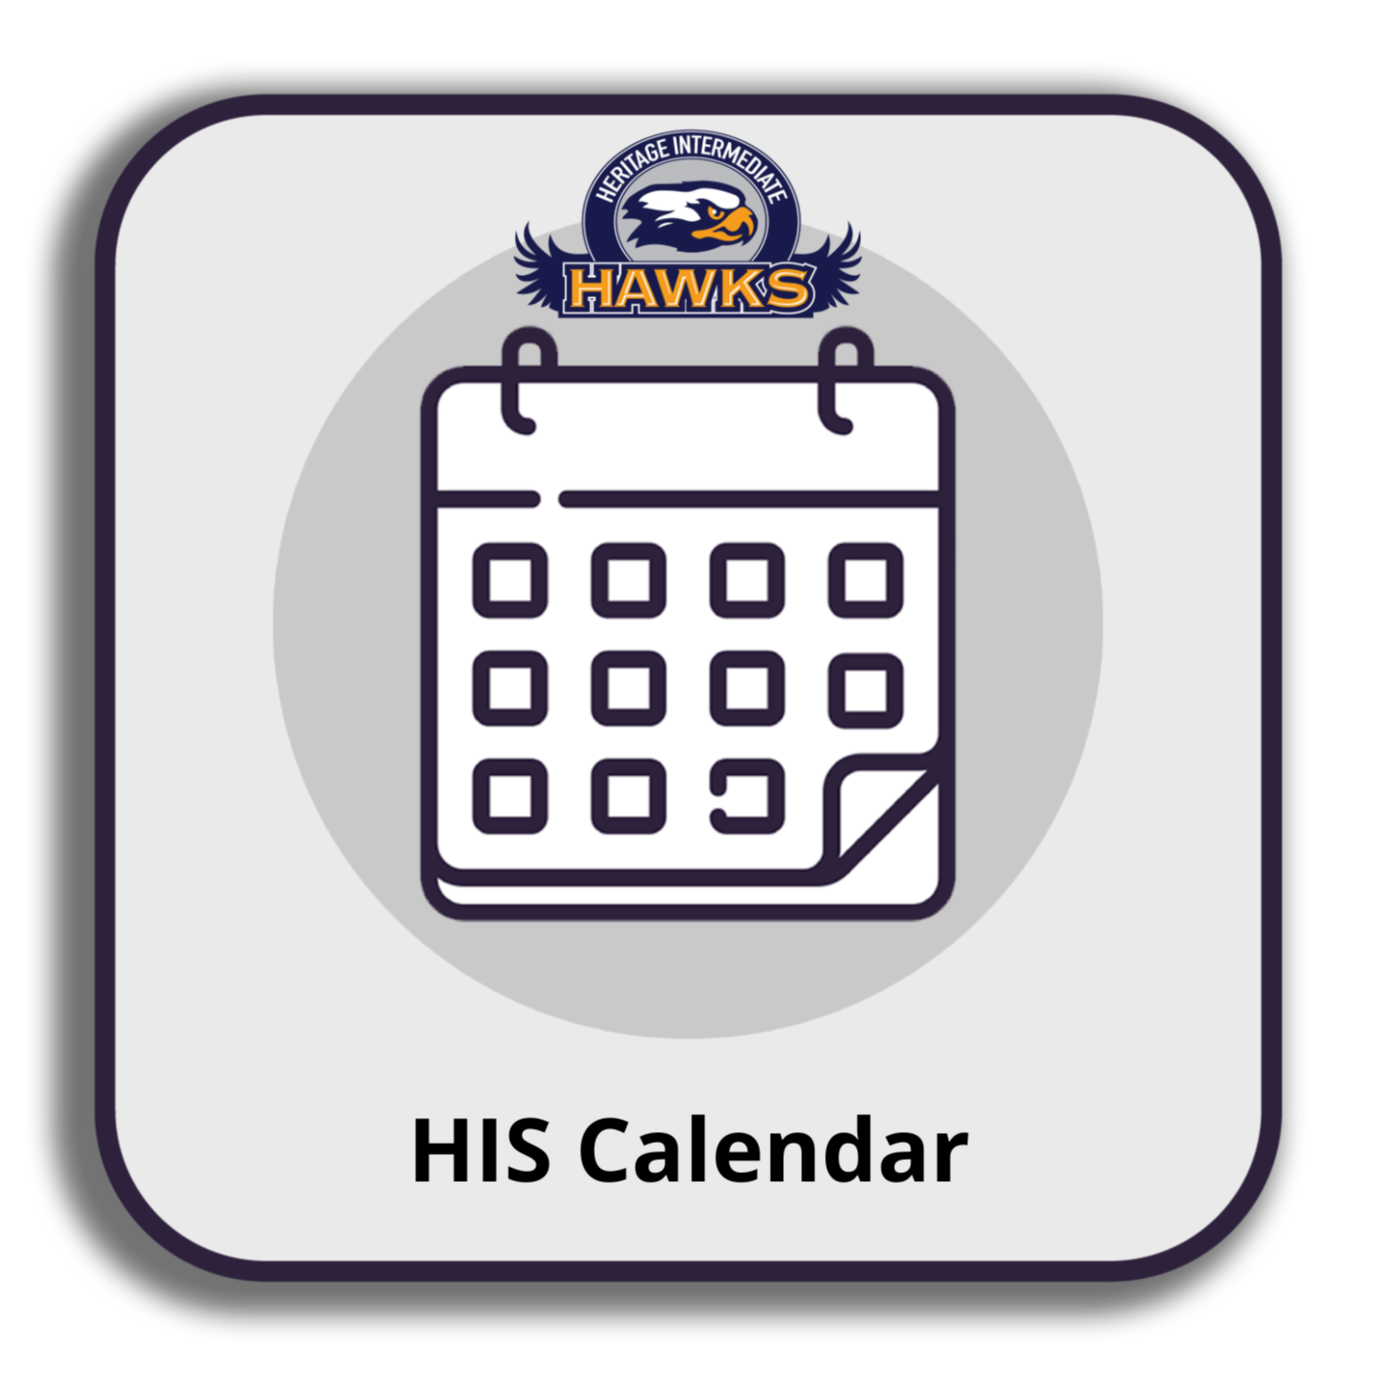 Heritage Intermediate School (HIS) Calendar